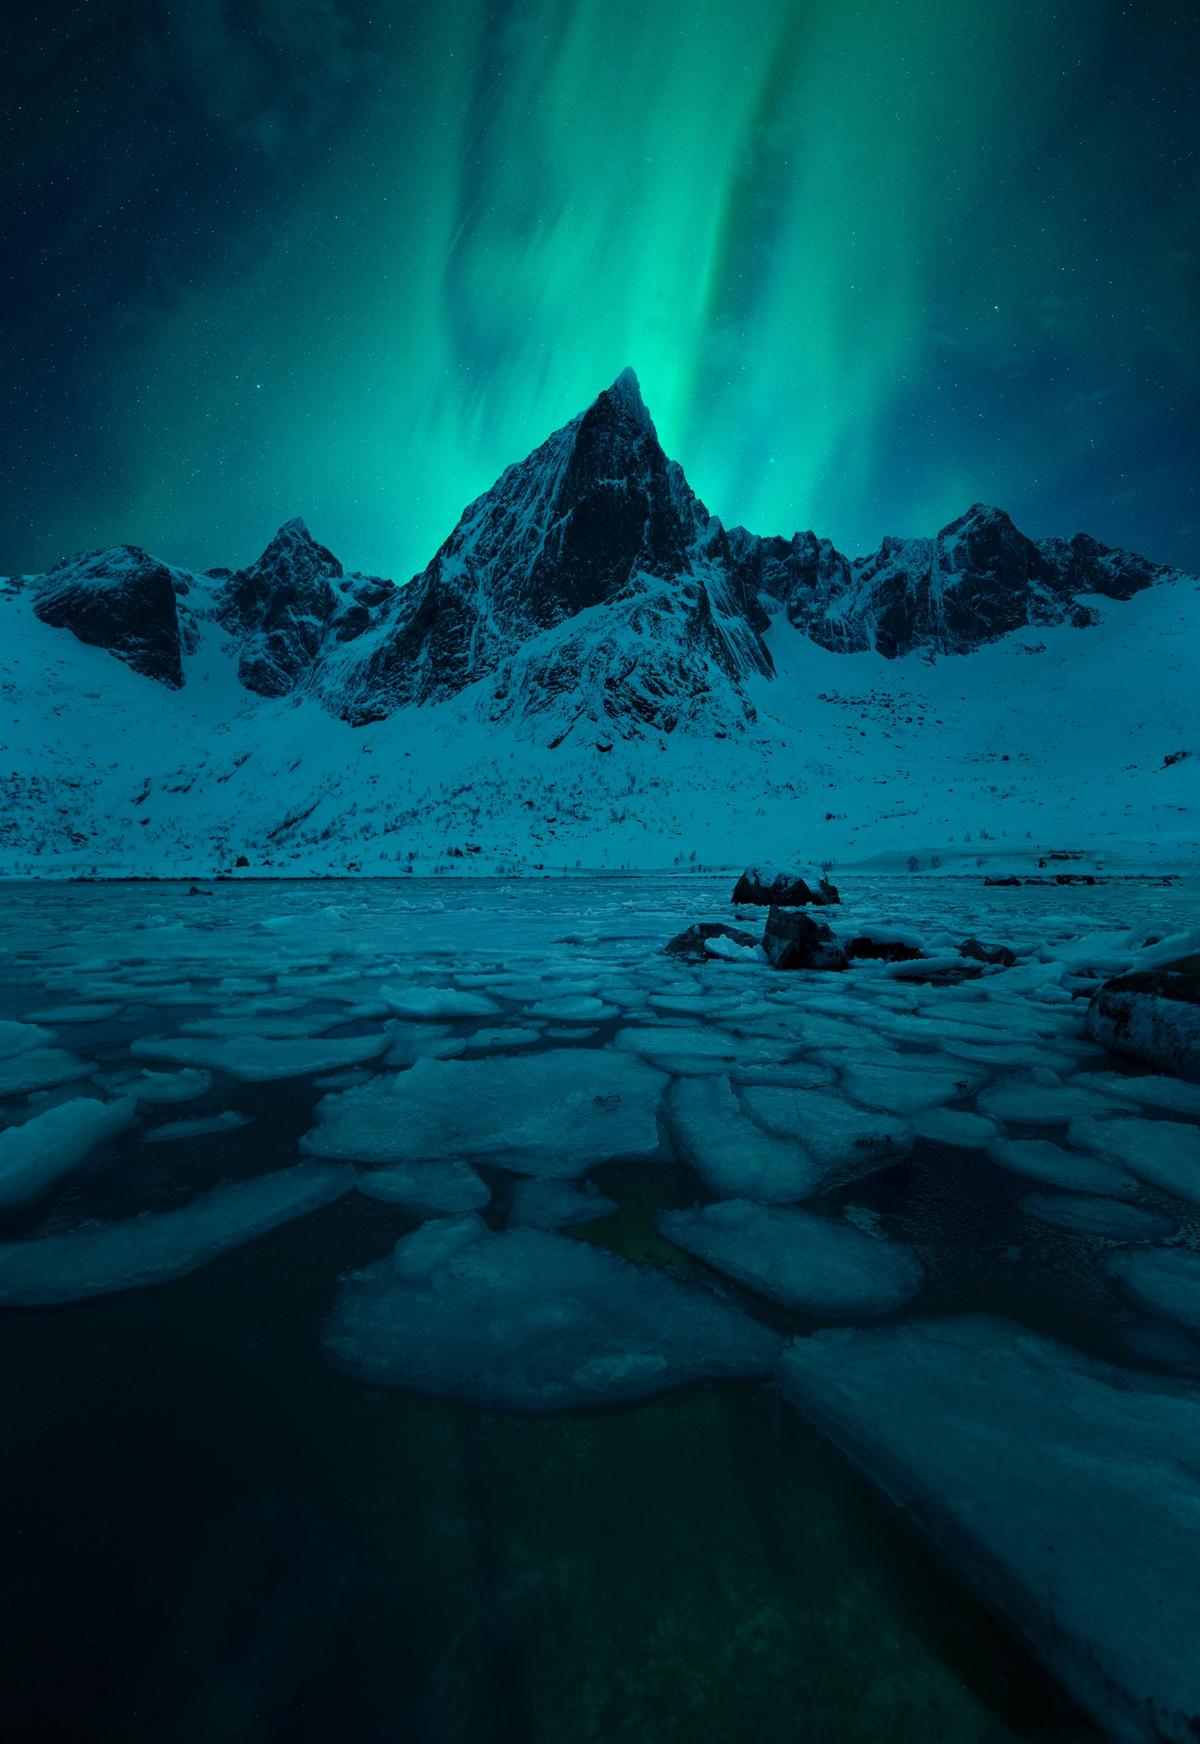 "Northern Lights over Dramatic Lofoten Peaks" by David Haring. (Courtesy of David Haring)